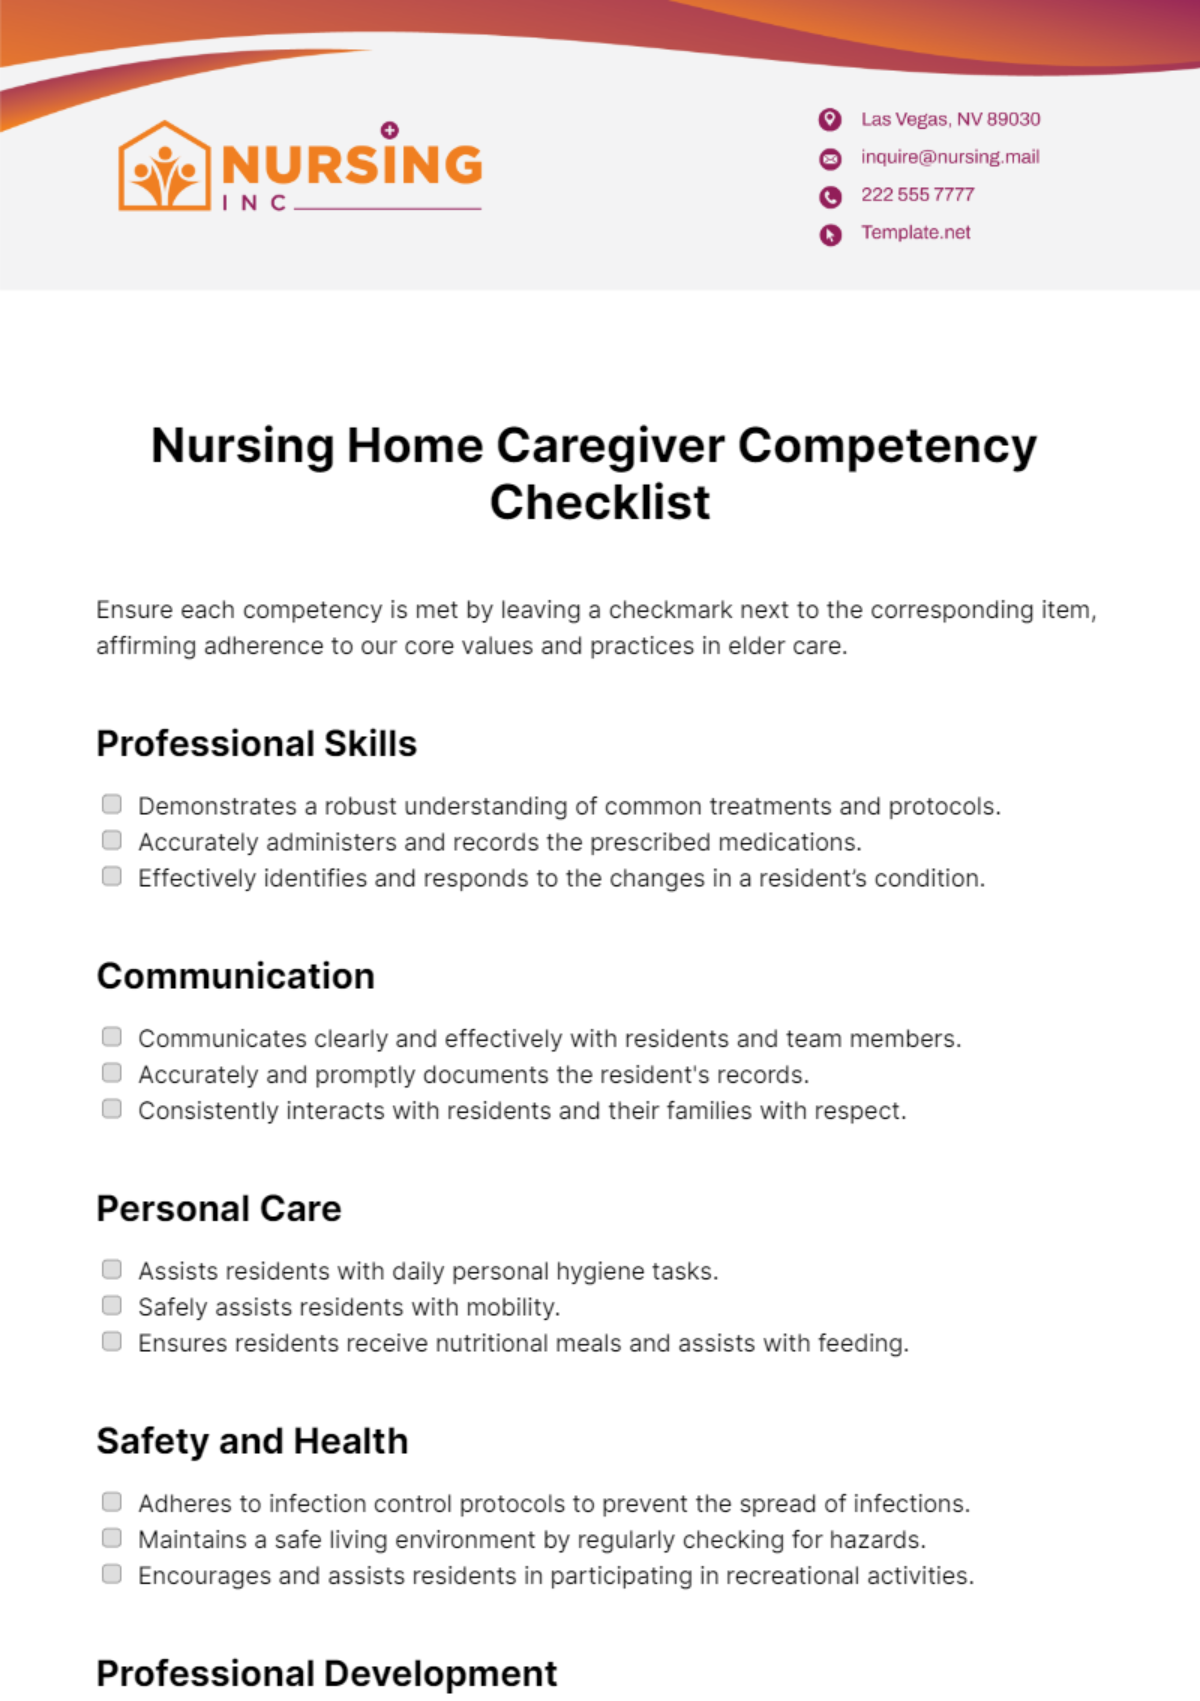 Nursing Home Caregiver Competency Checklist Template